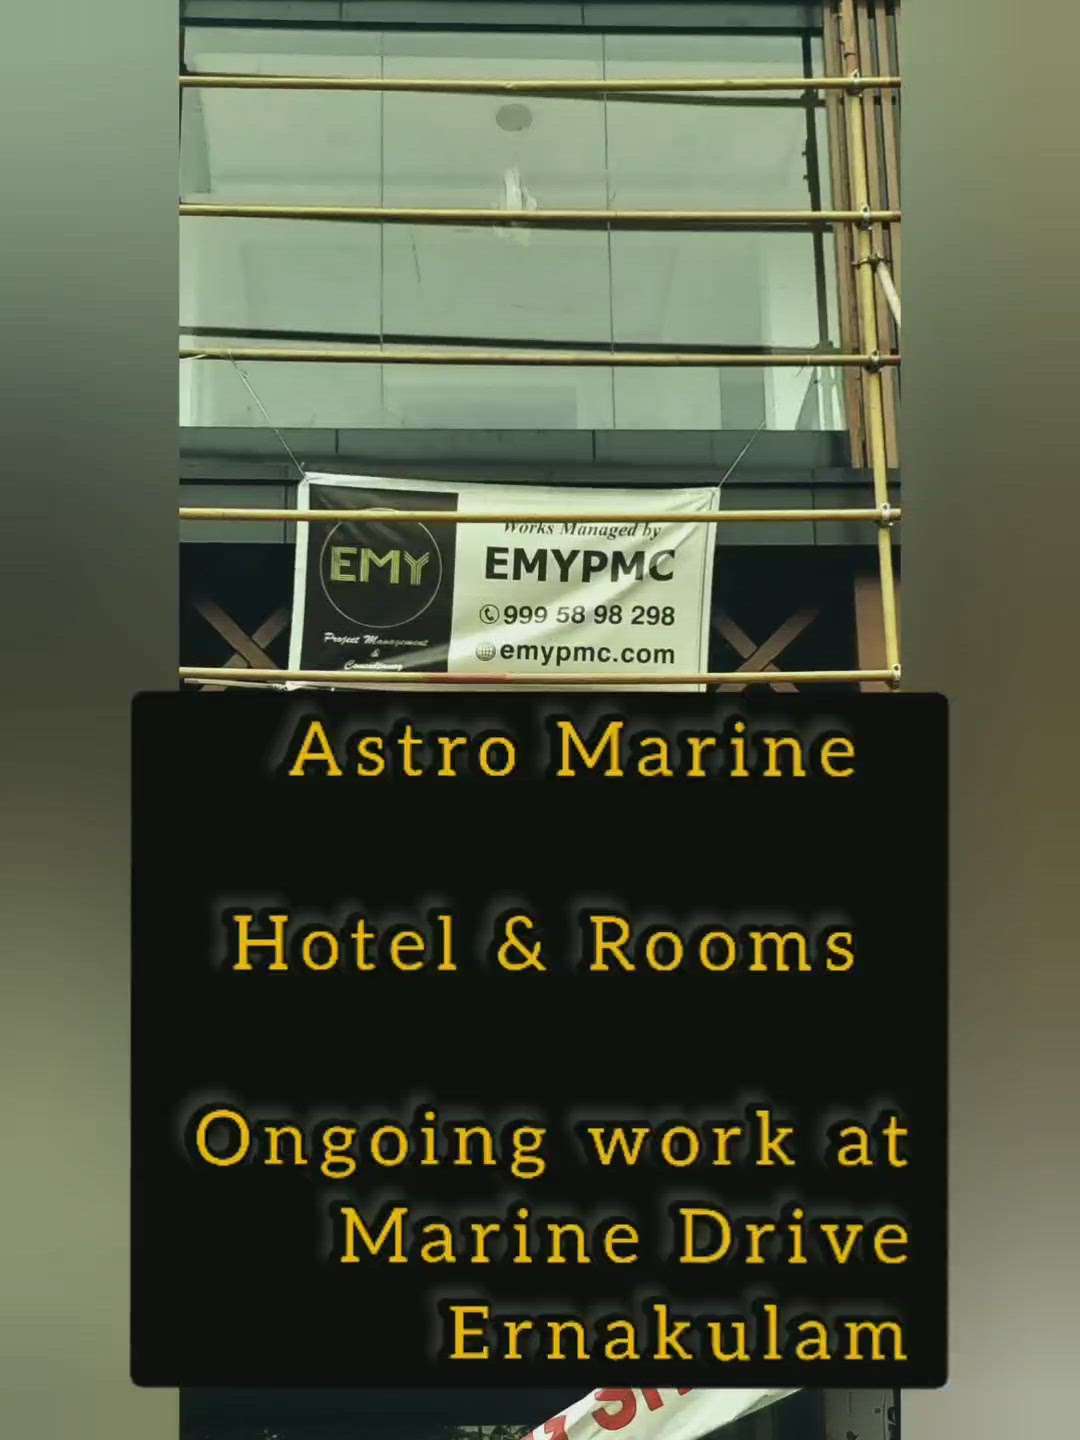 Ongoing work Astro Marine hotel rooms at Ernakulam
www.emypmc.com
#Hotel_interior #hotels #hotelroom #hotelelevation #hotel_design #hotelinteriordesign #Ernakulam #marine_drive #roomes